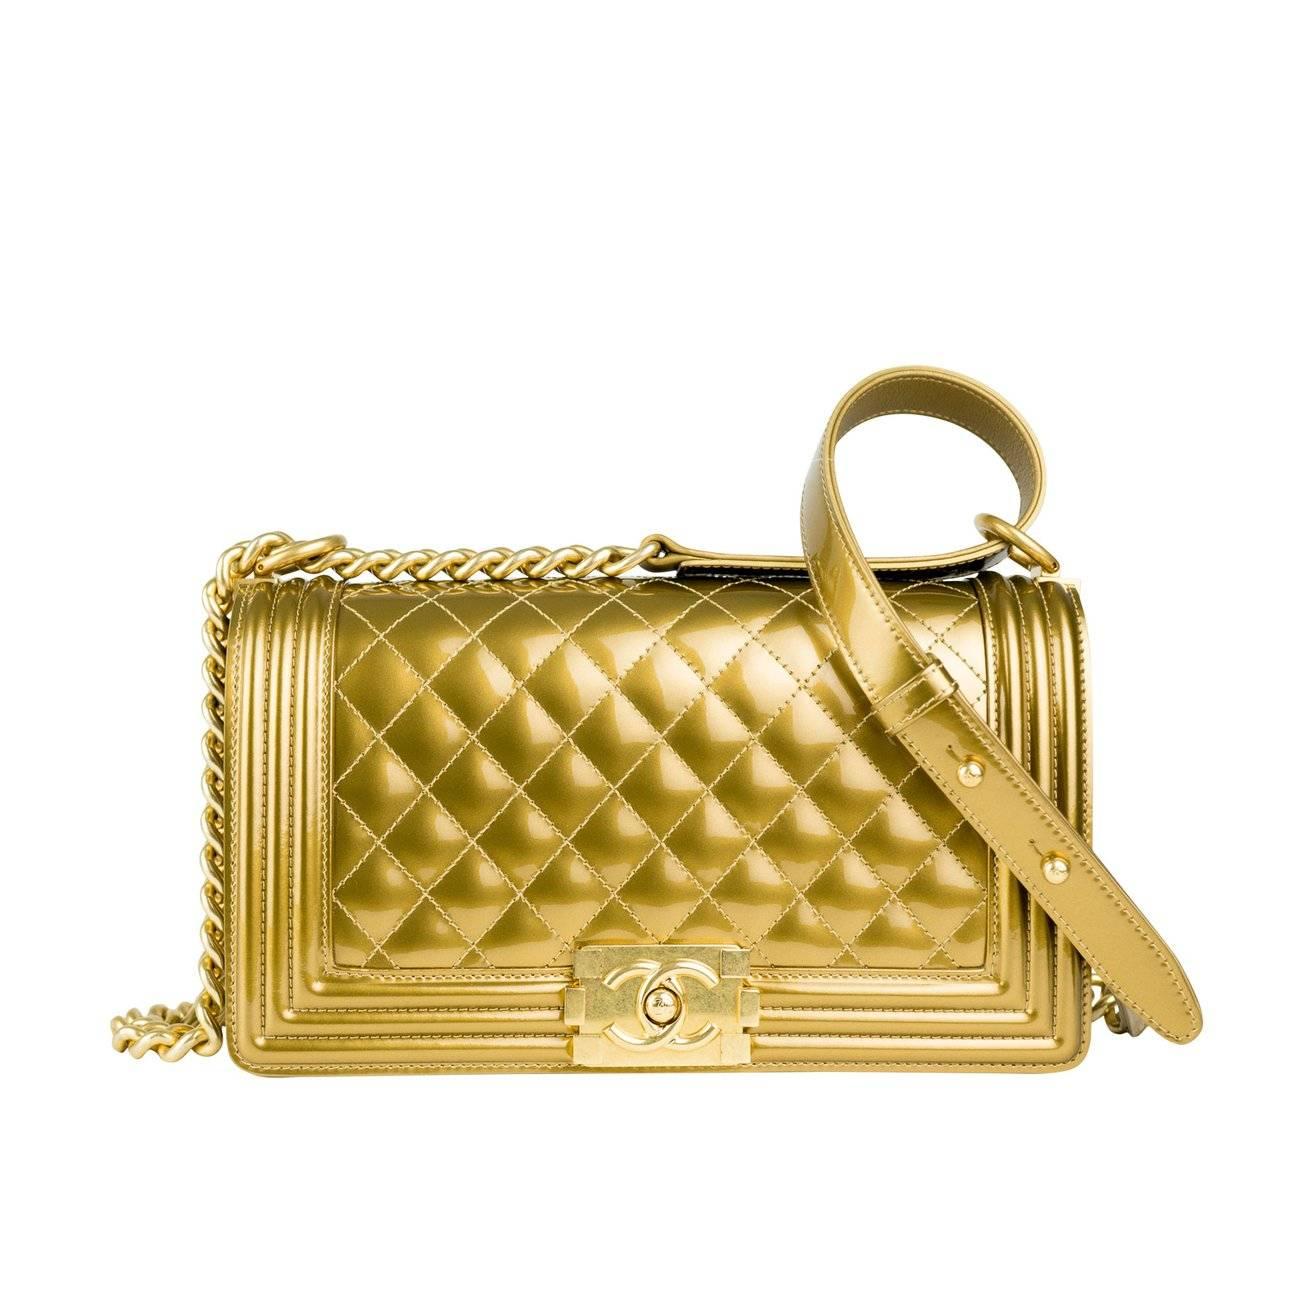 Soldout Chanel Gold Metallic Old Medium Boy Bag Limited Edition